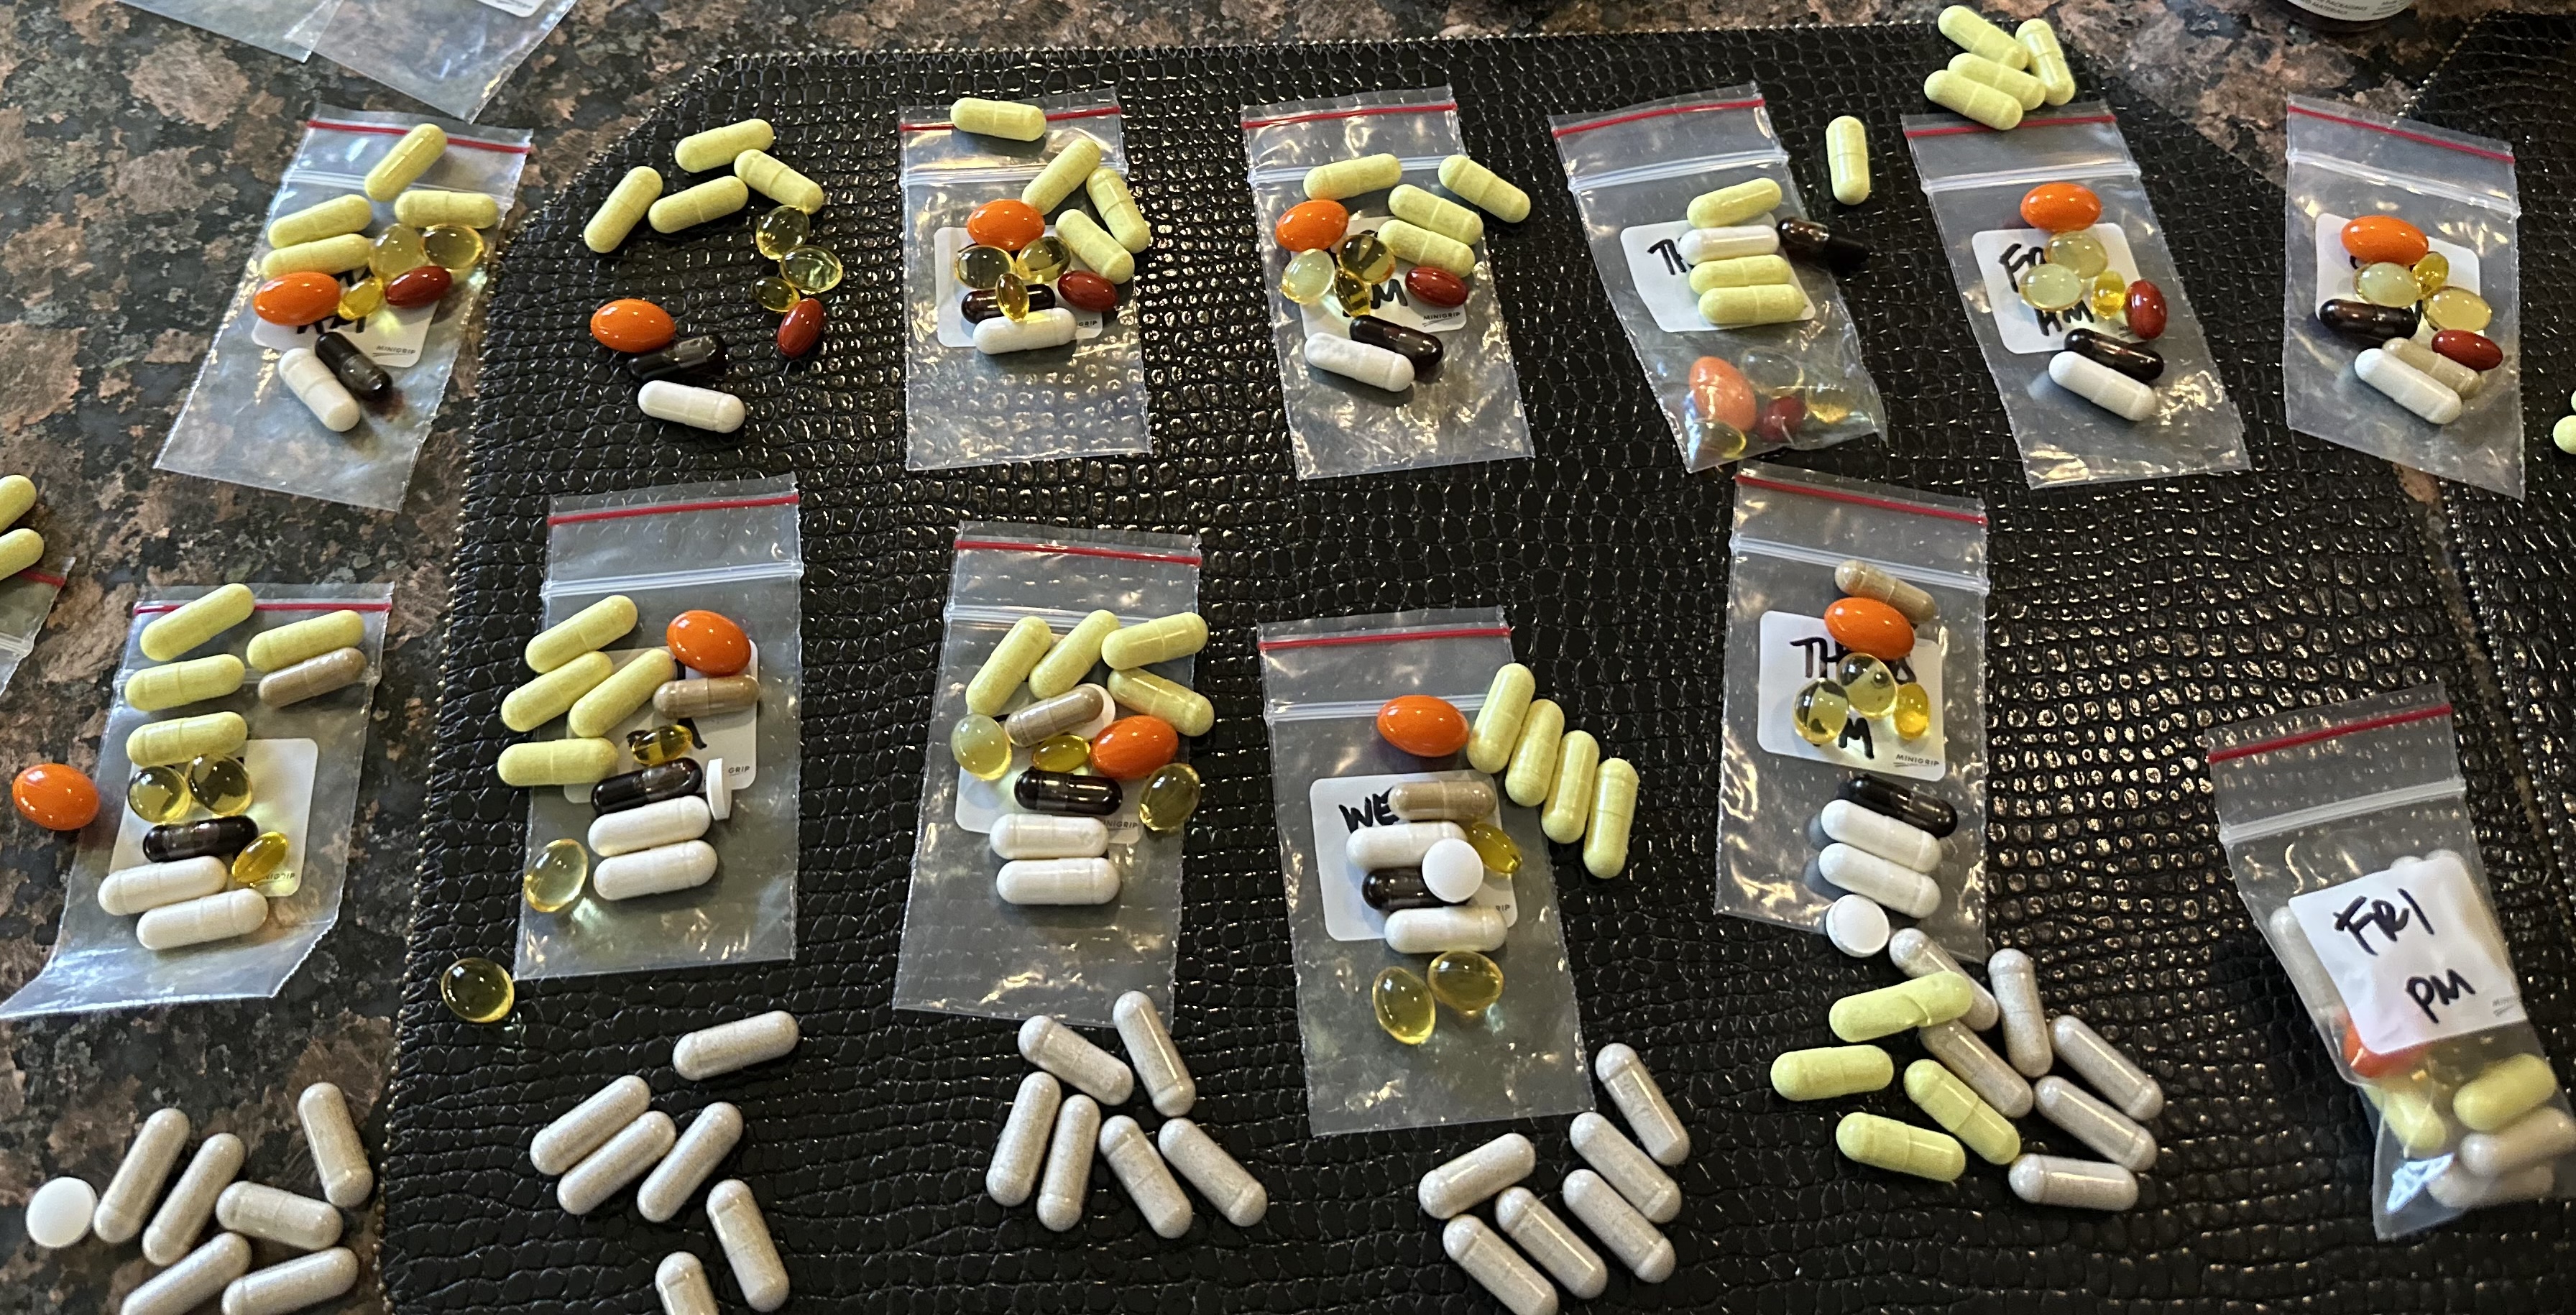 Cruxer Weekly Pill Box Organiser Am Pm 2 Times Medicine Box Daily